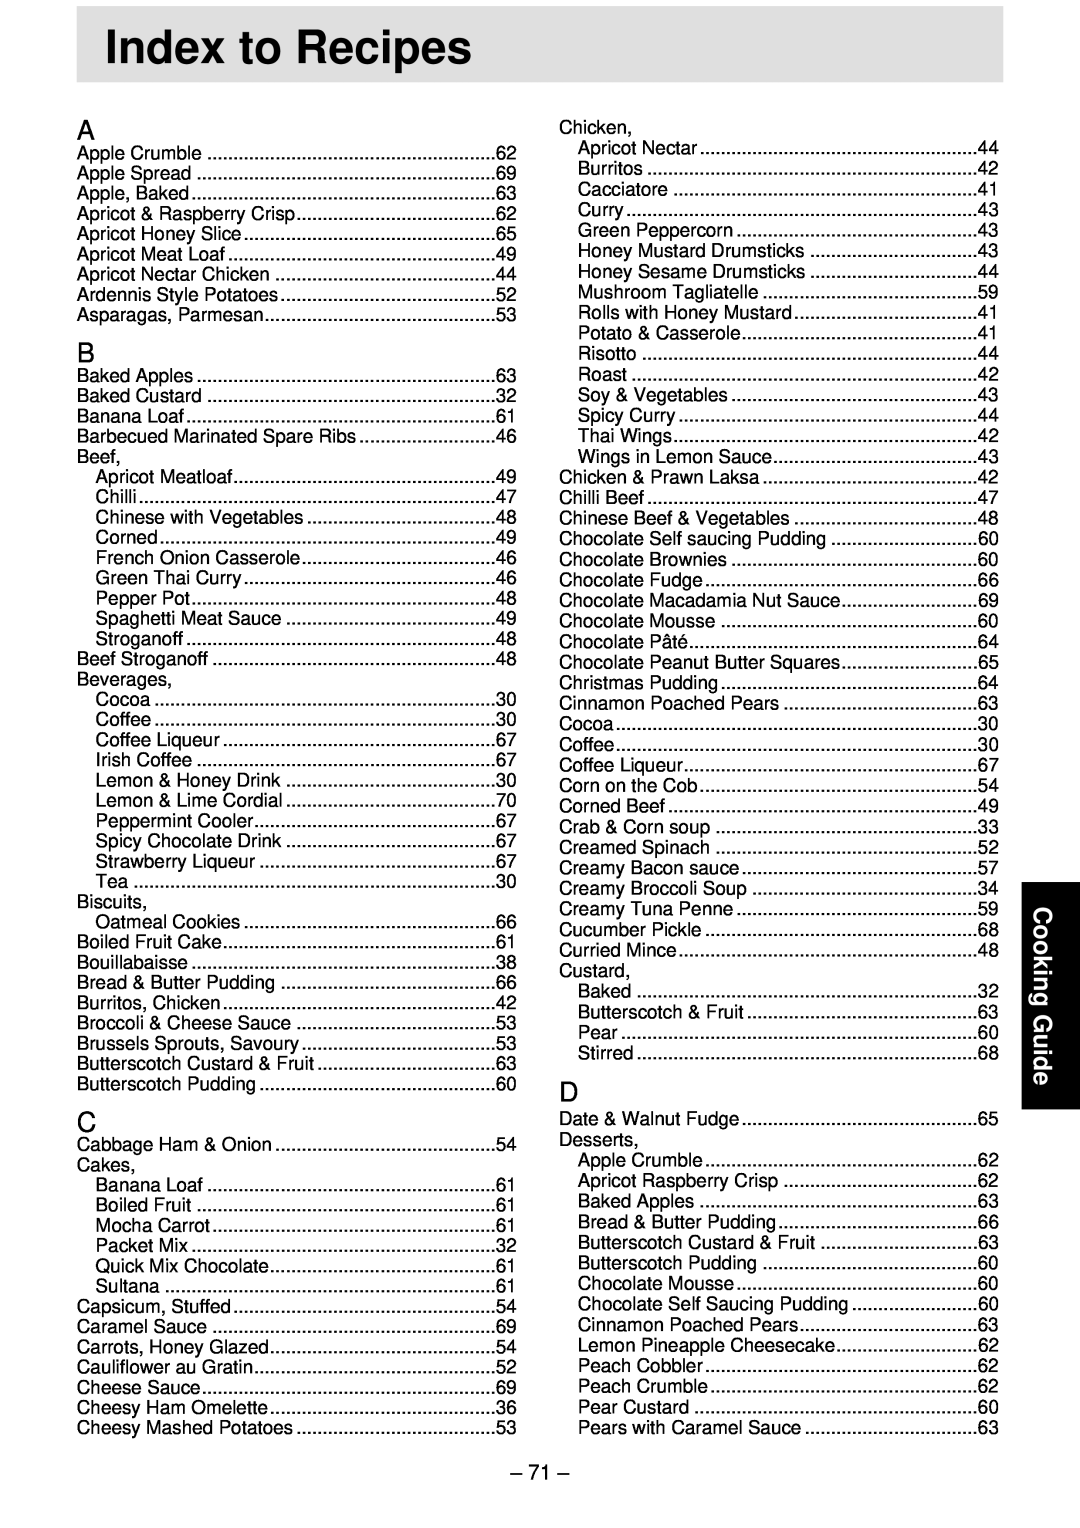 Panasonic NN-S761, NN-T791, NN-S781 manual Index to Recipes, Cooking Guide 